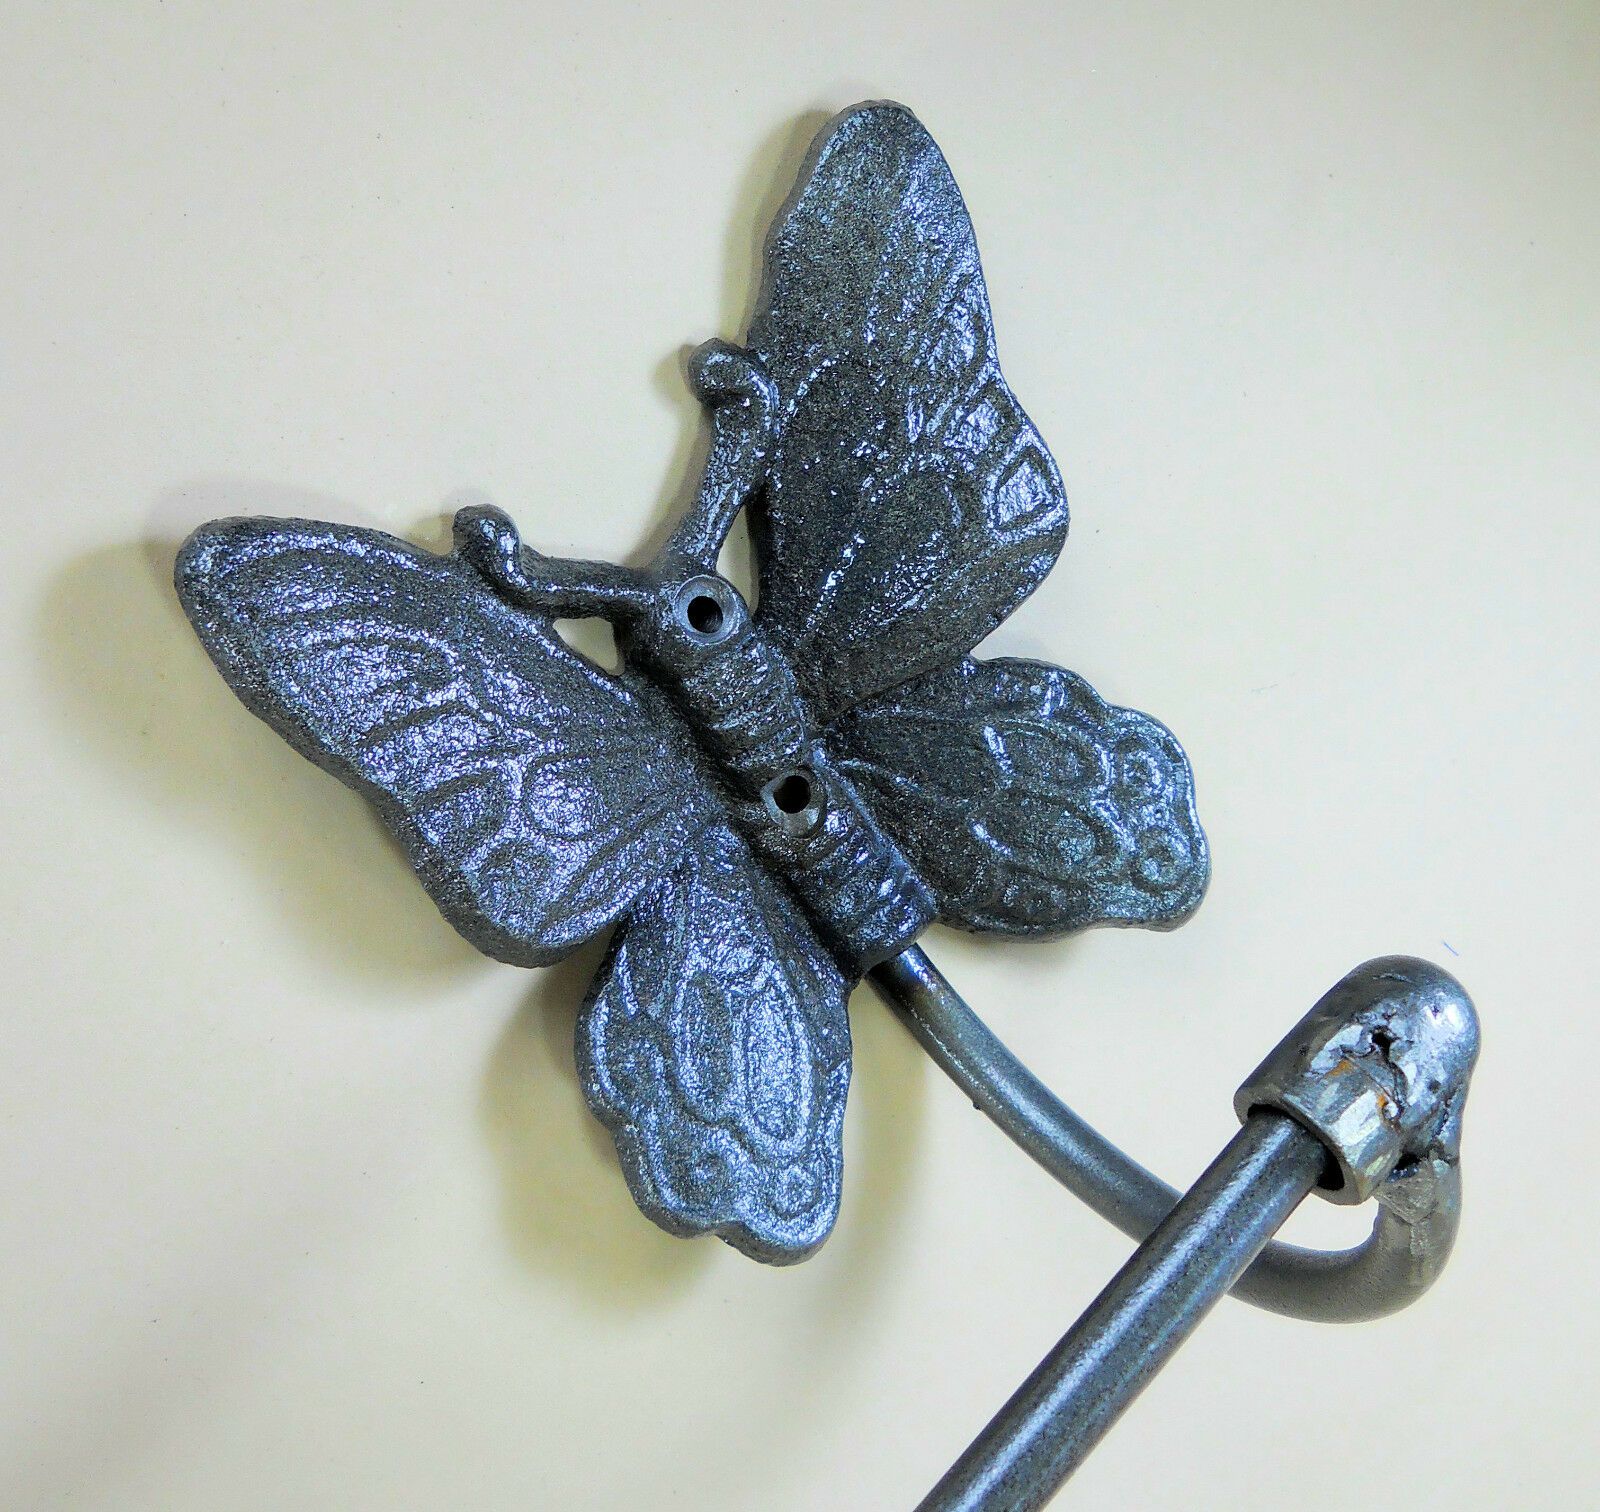 Lori's Butterfly Bath Assessories Cast Iron 4 pc w/ hardware bath accessories Carvers Olde Iron 